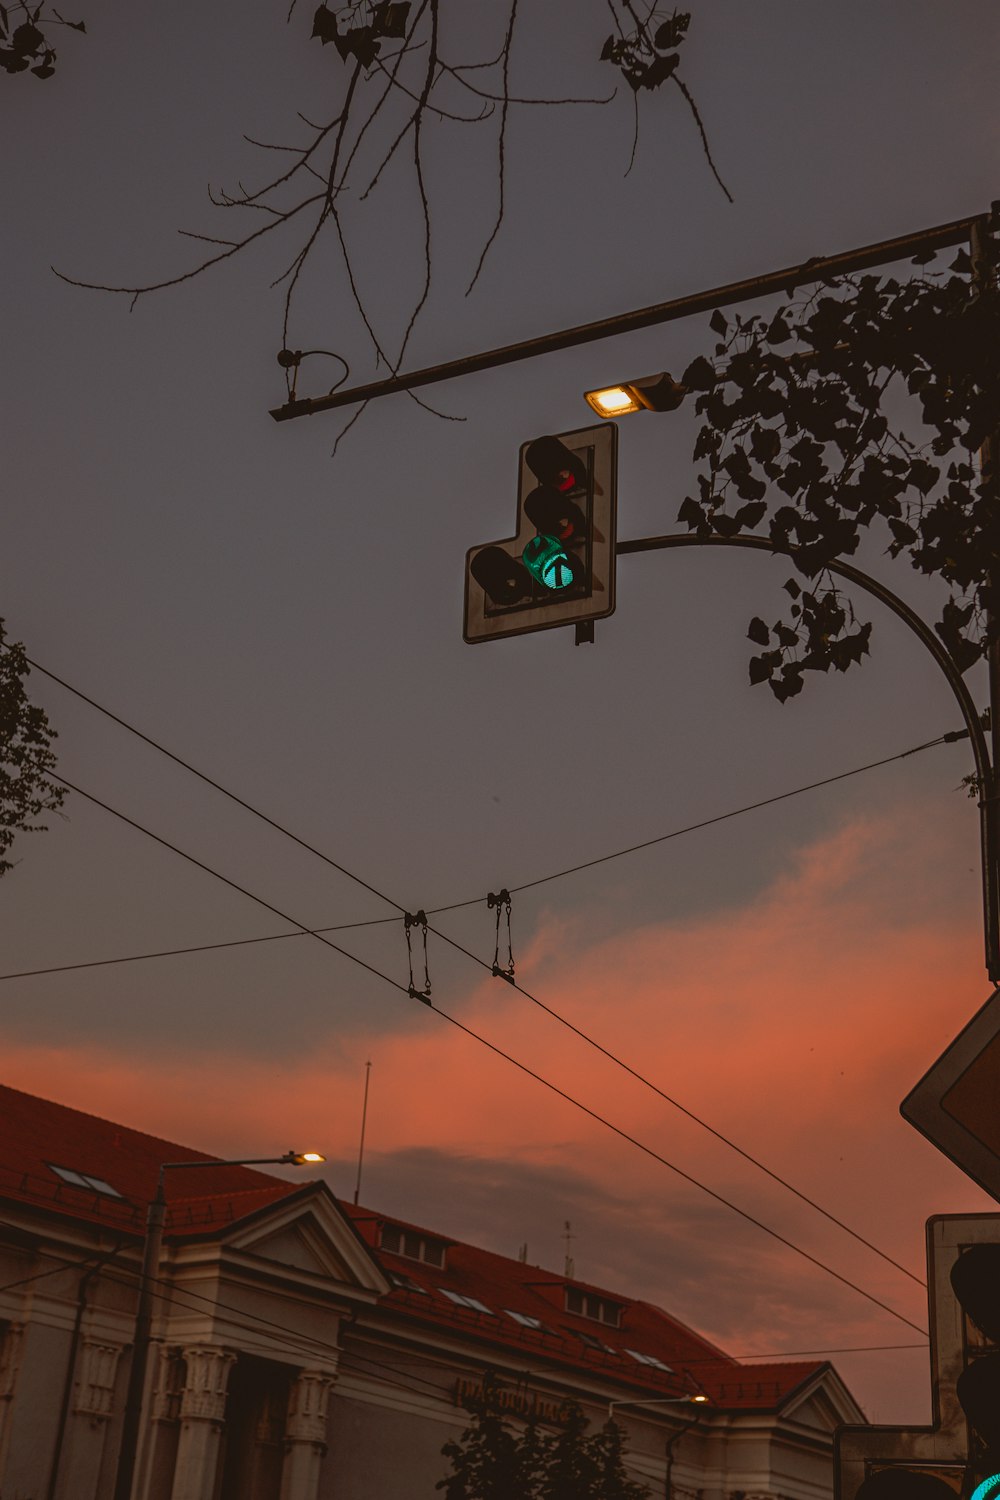 traffic light with green light